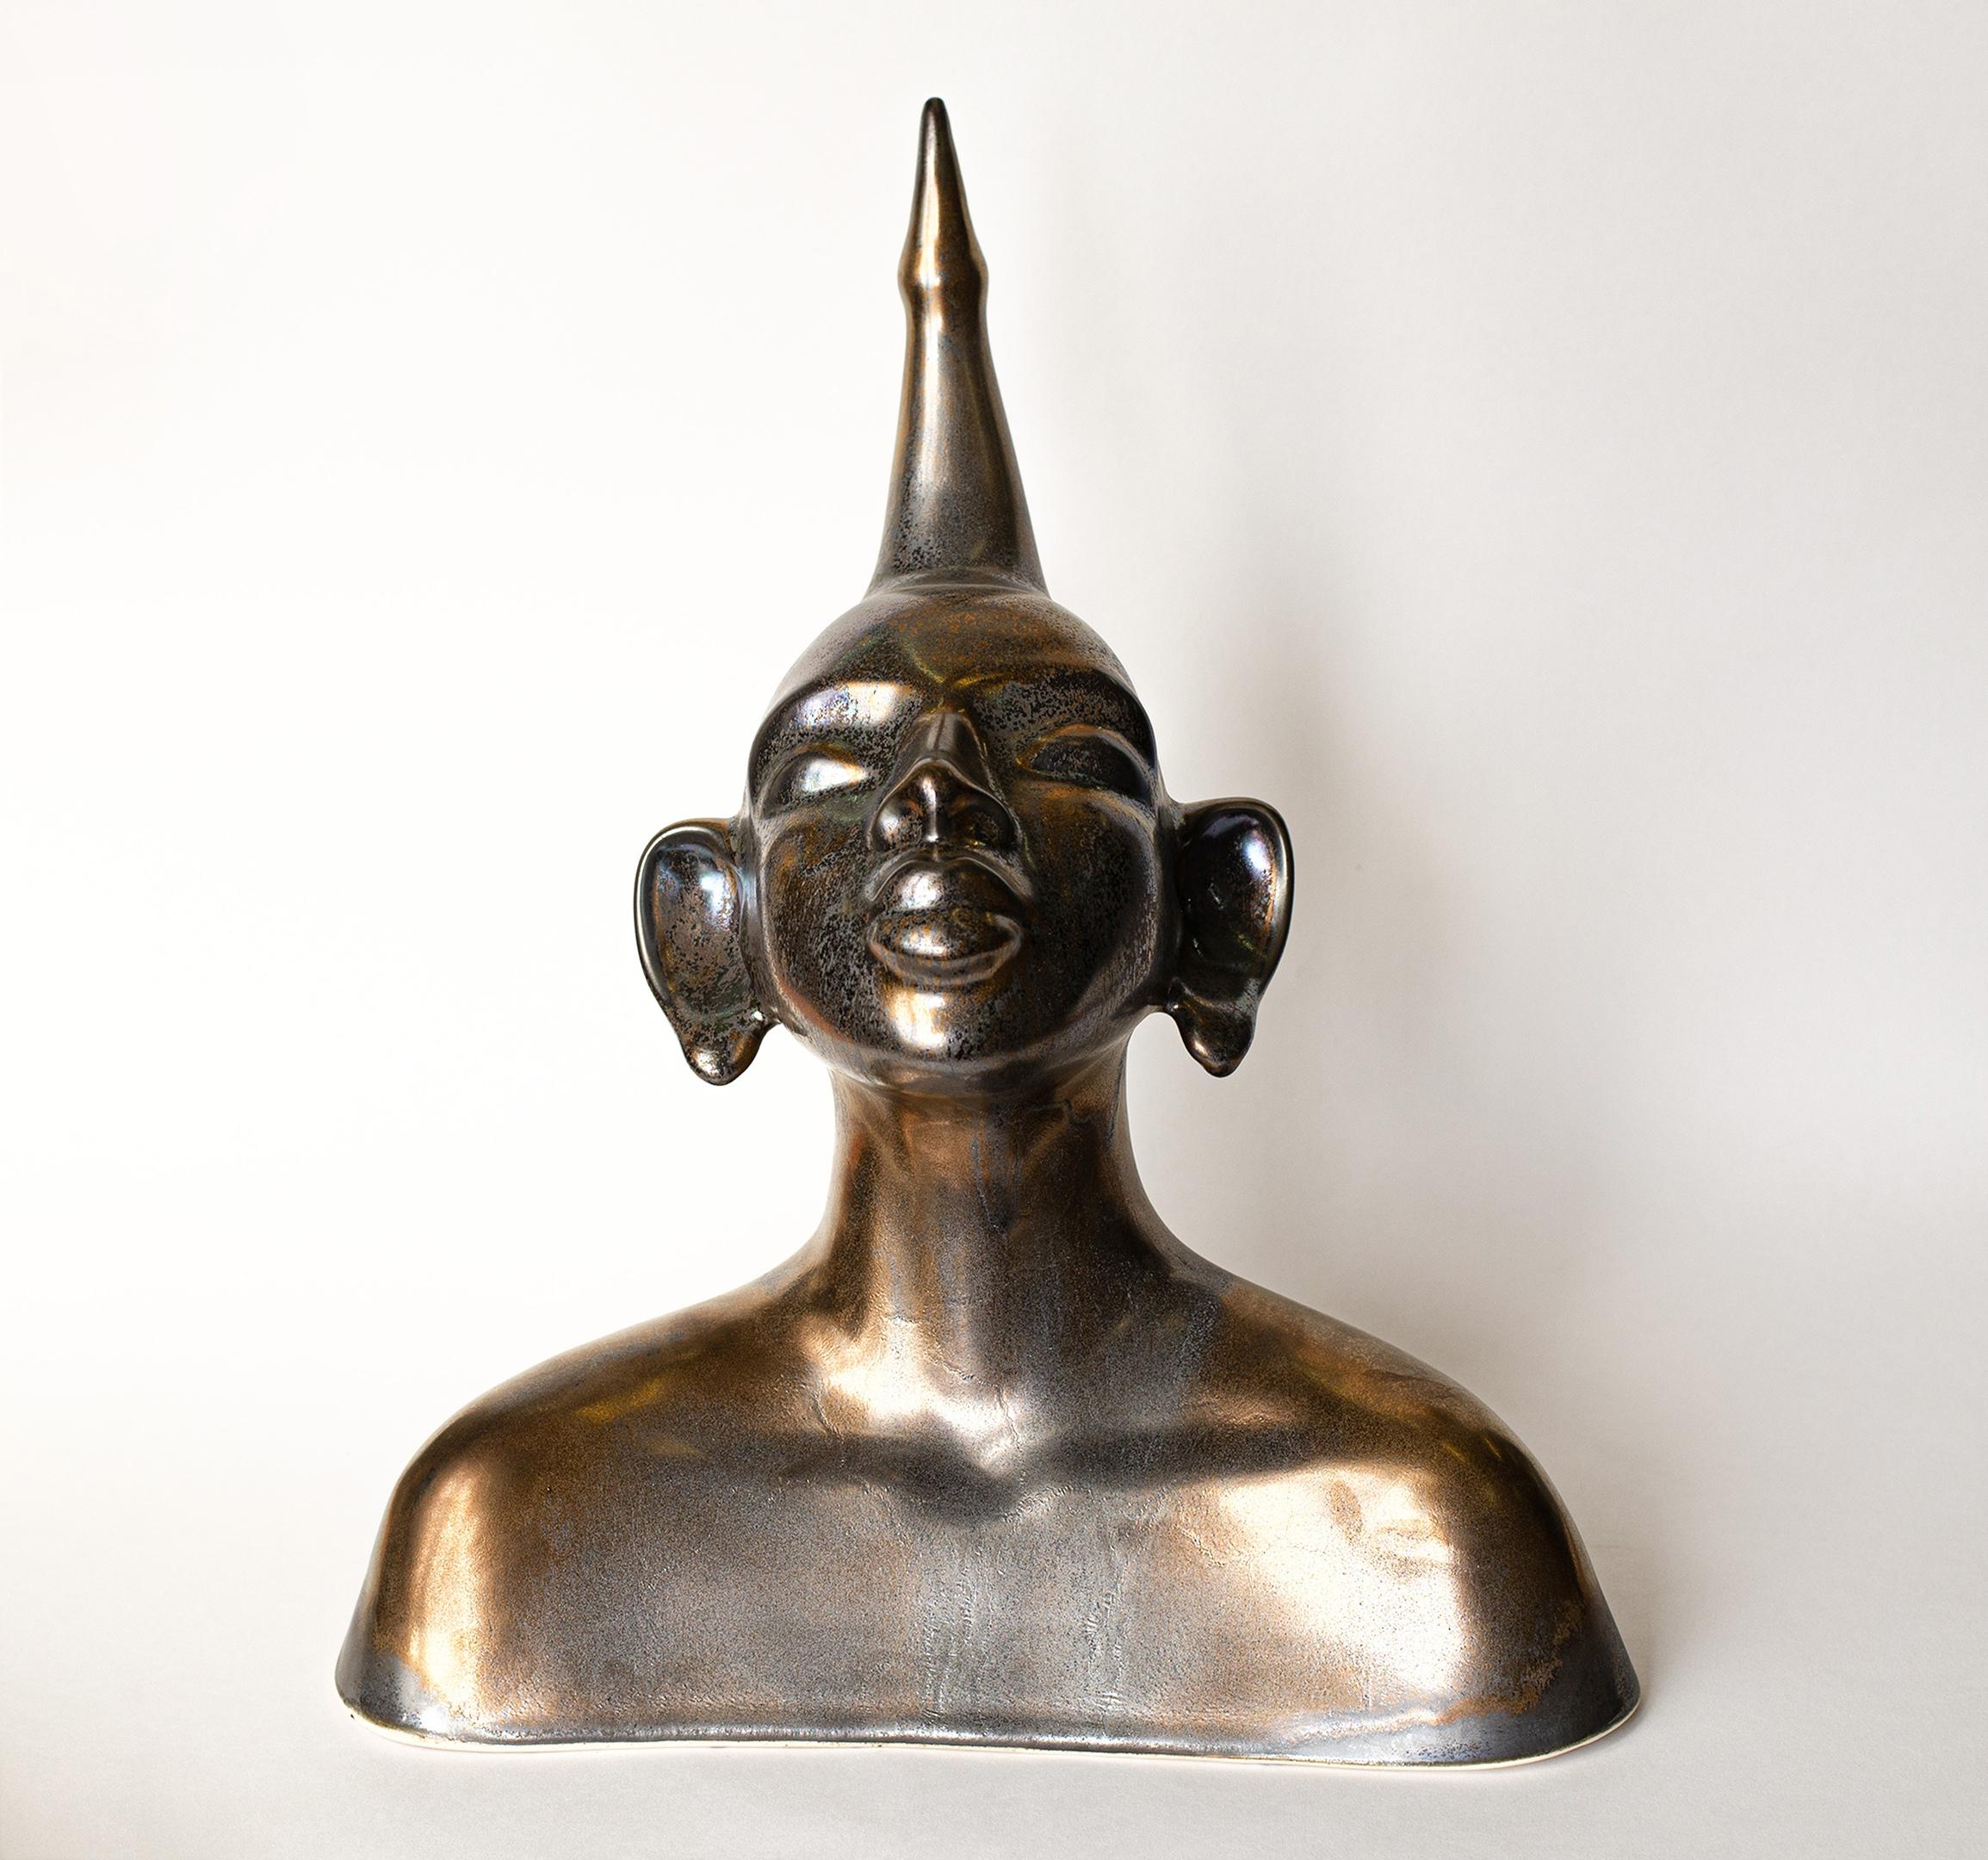 Lina Gonchar - "Lina I" - Unique Ceramic Sculpture - Coated in Gold